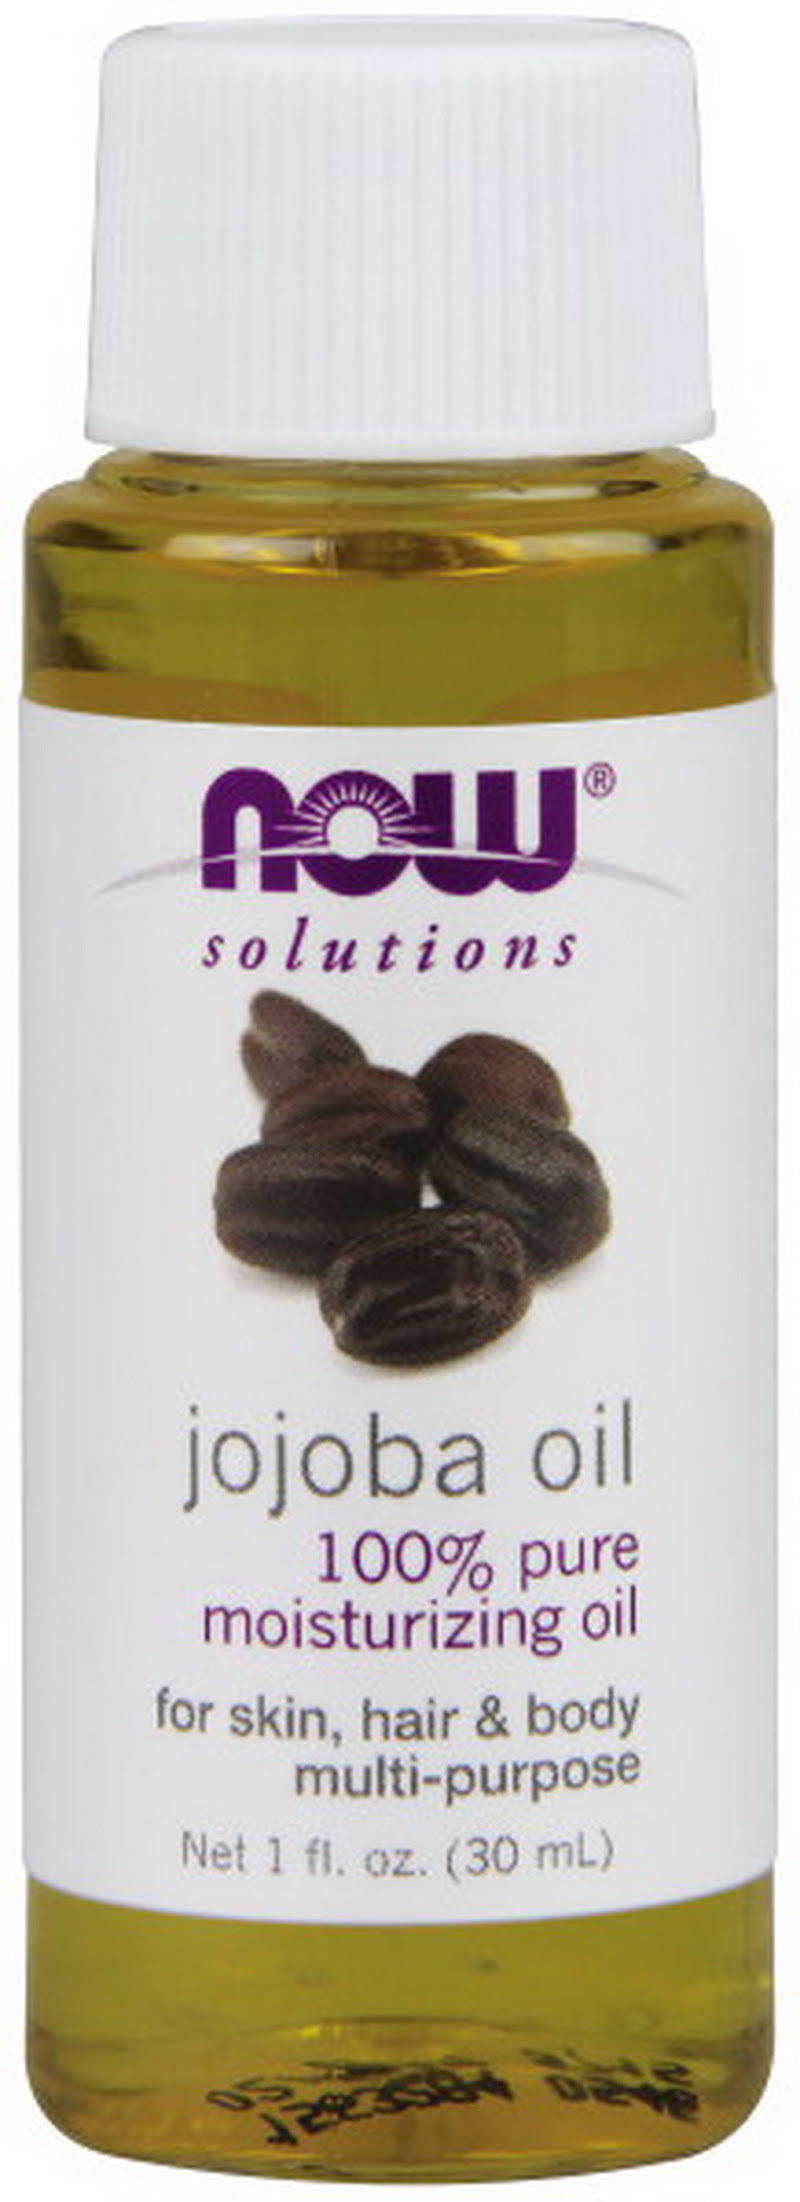 Now Foods Jojoba Oil - 1oz